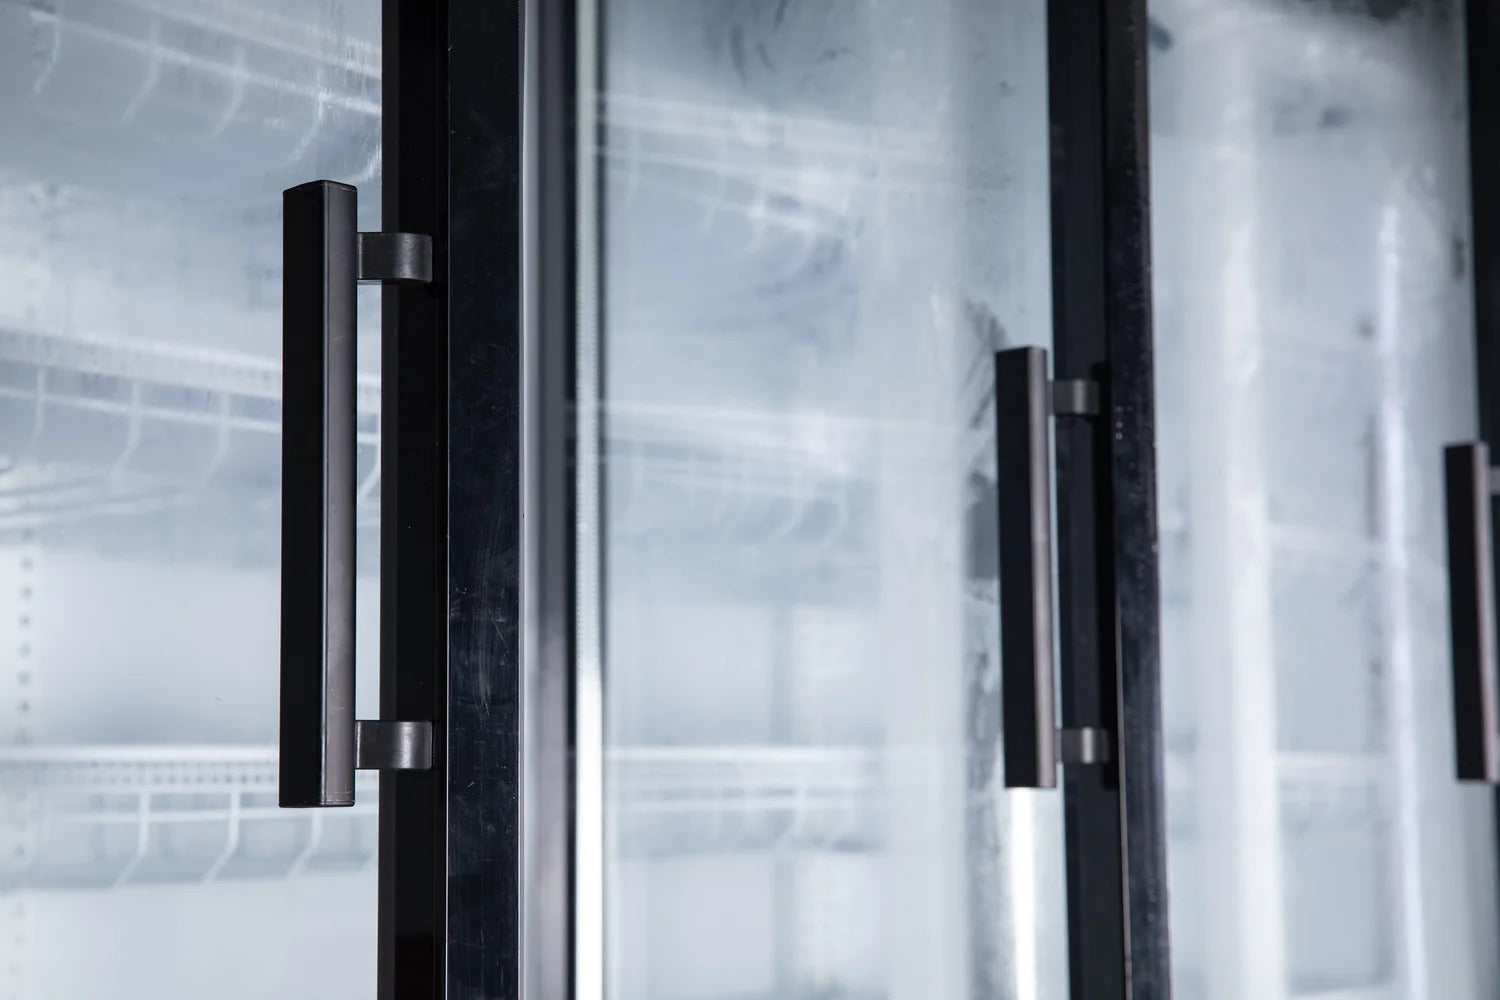 NAFCOOL FGDR95 93″ Commercial Wide Four Glass Door Commercial Beverage Refrigerator Merchandiser